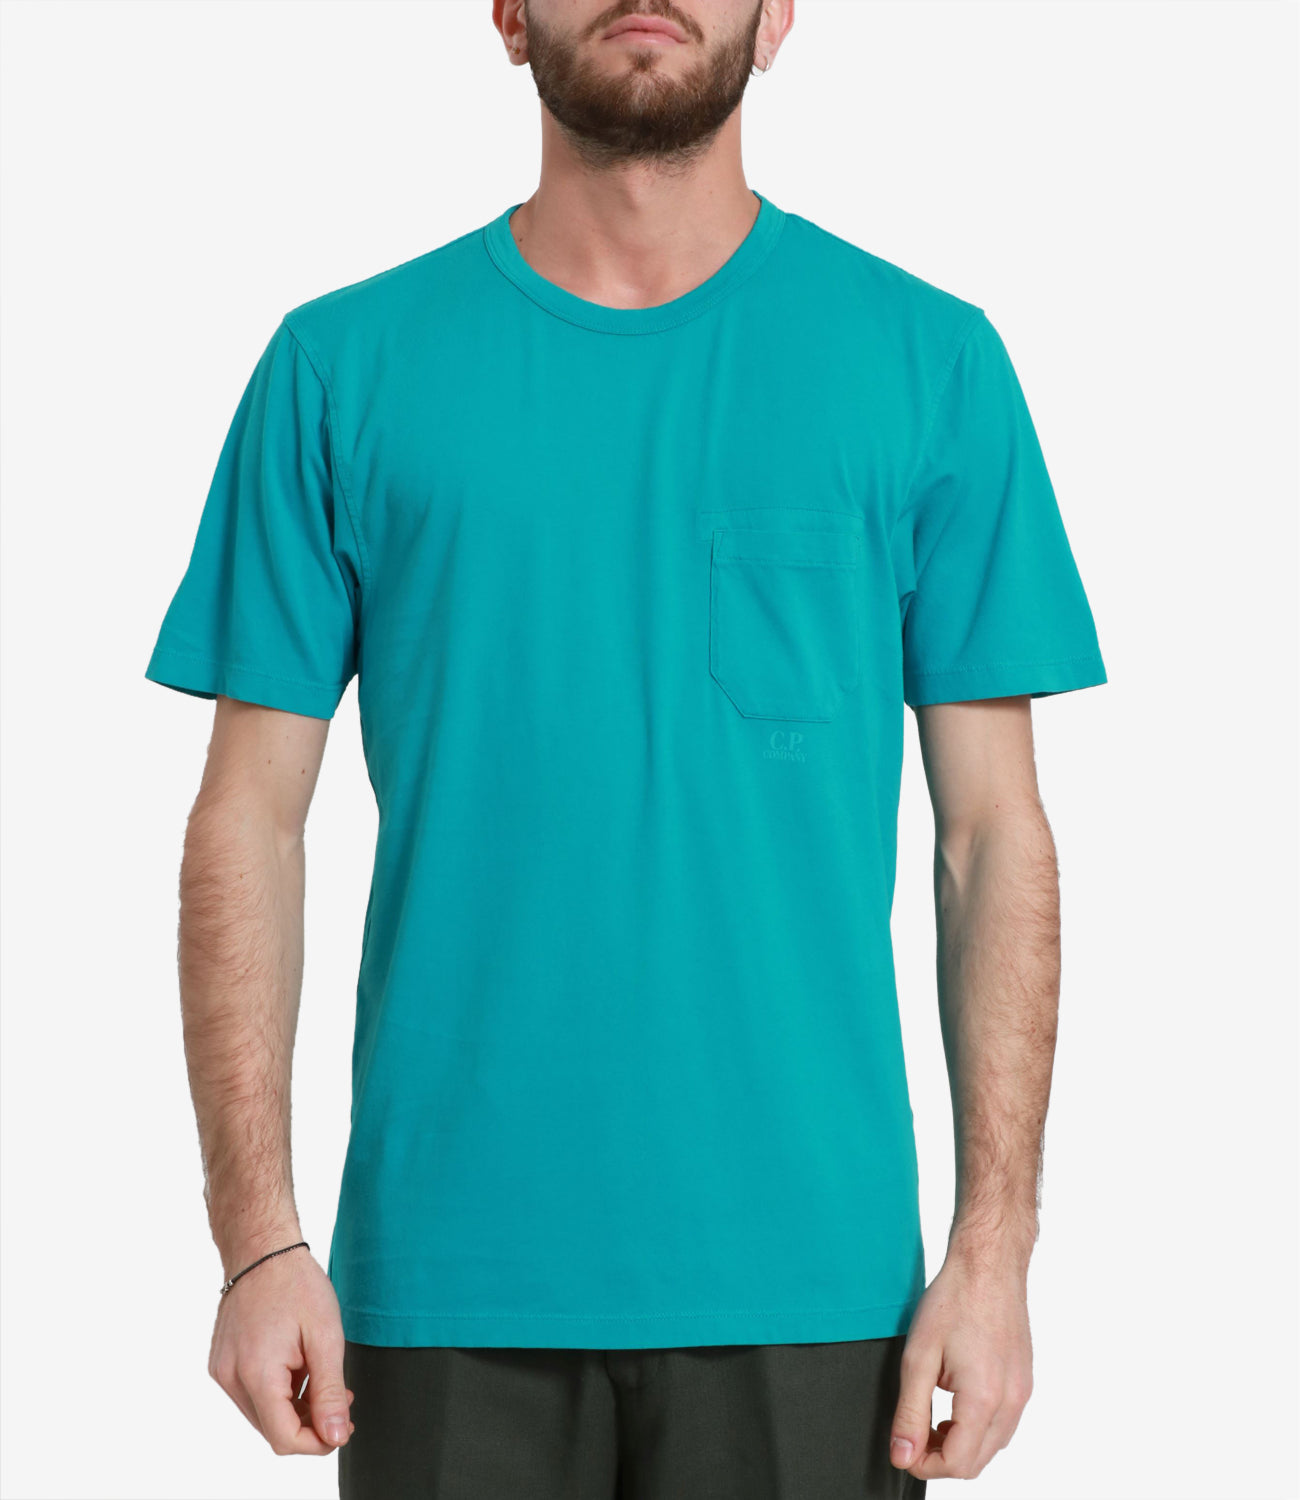 C.P. Company | T-Shirt Jersey Pocket Turquoise